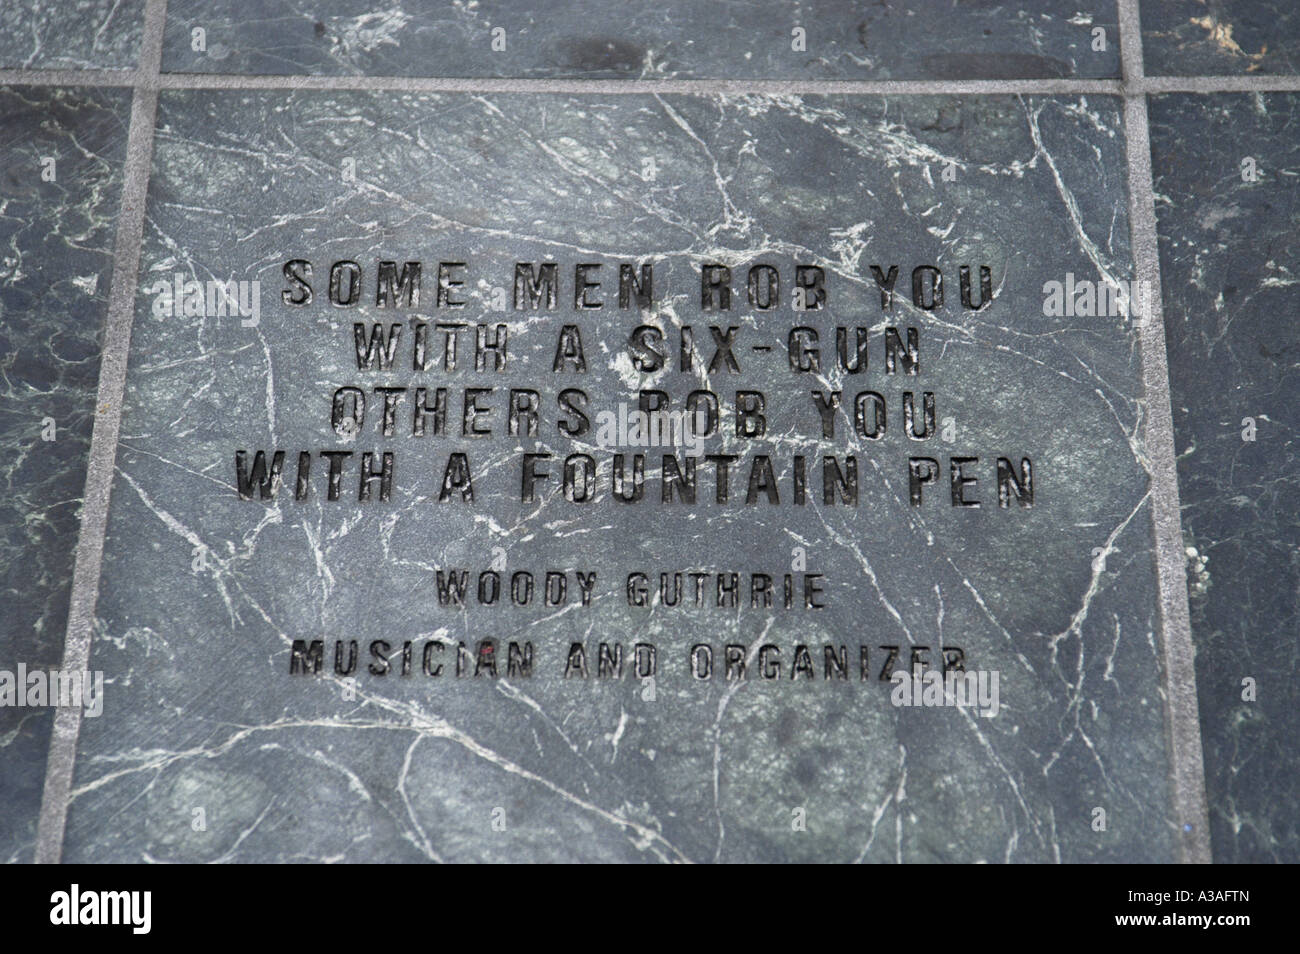 P23 066 Michigan Labor Legacy Landmark, Woody Guthrie Fountain Pen Quote, Detroit Stock Photo